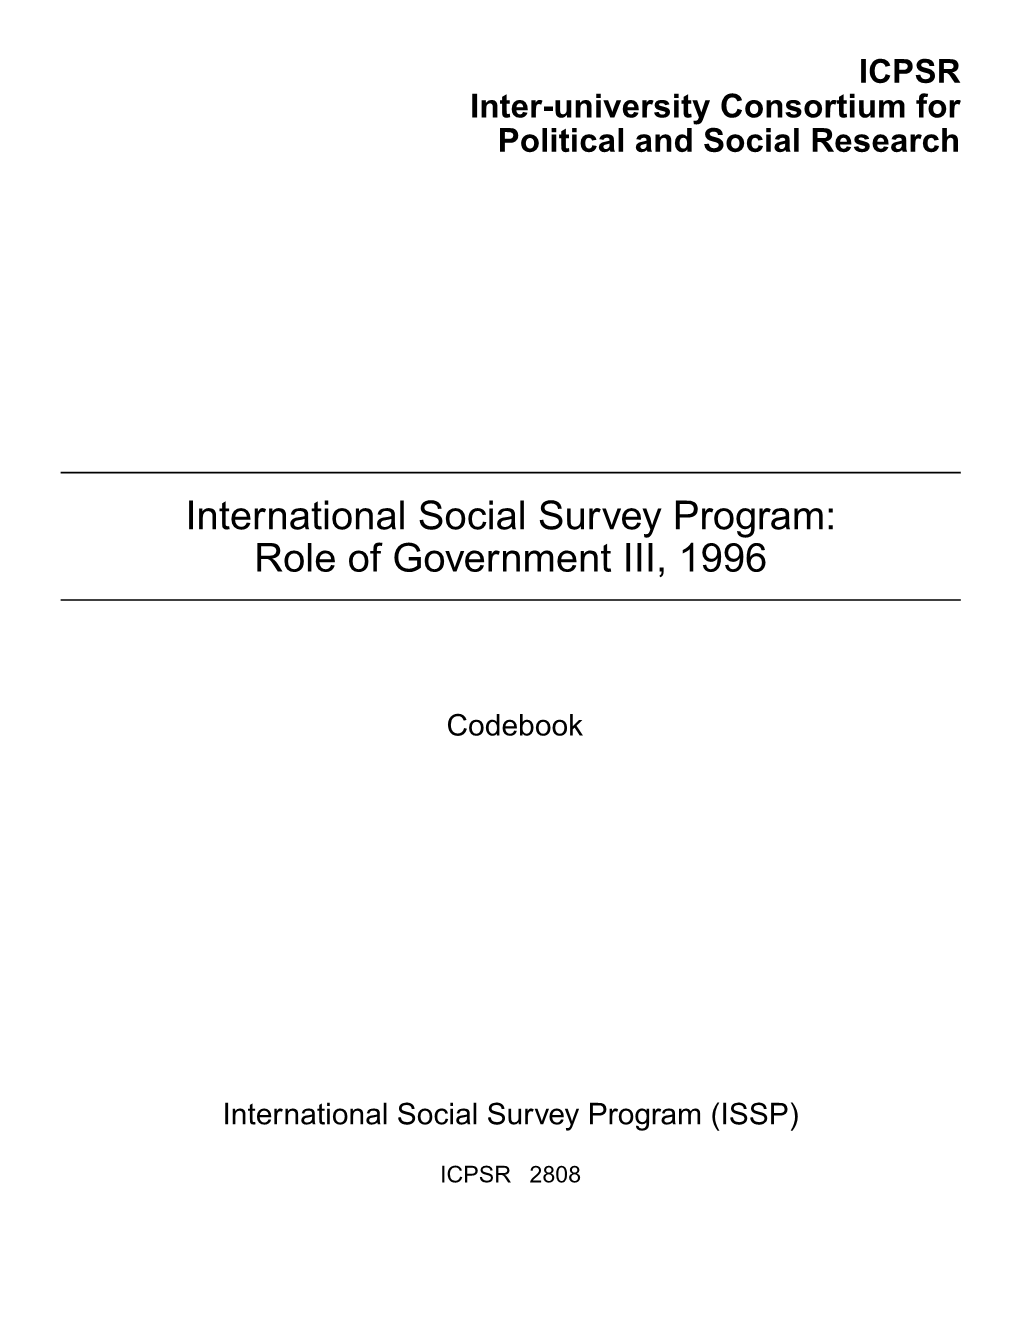 International Social Survey Program: Role of Government III, 1996